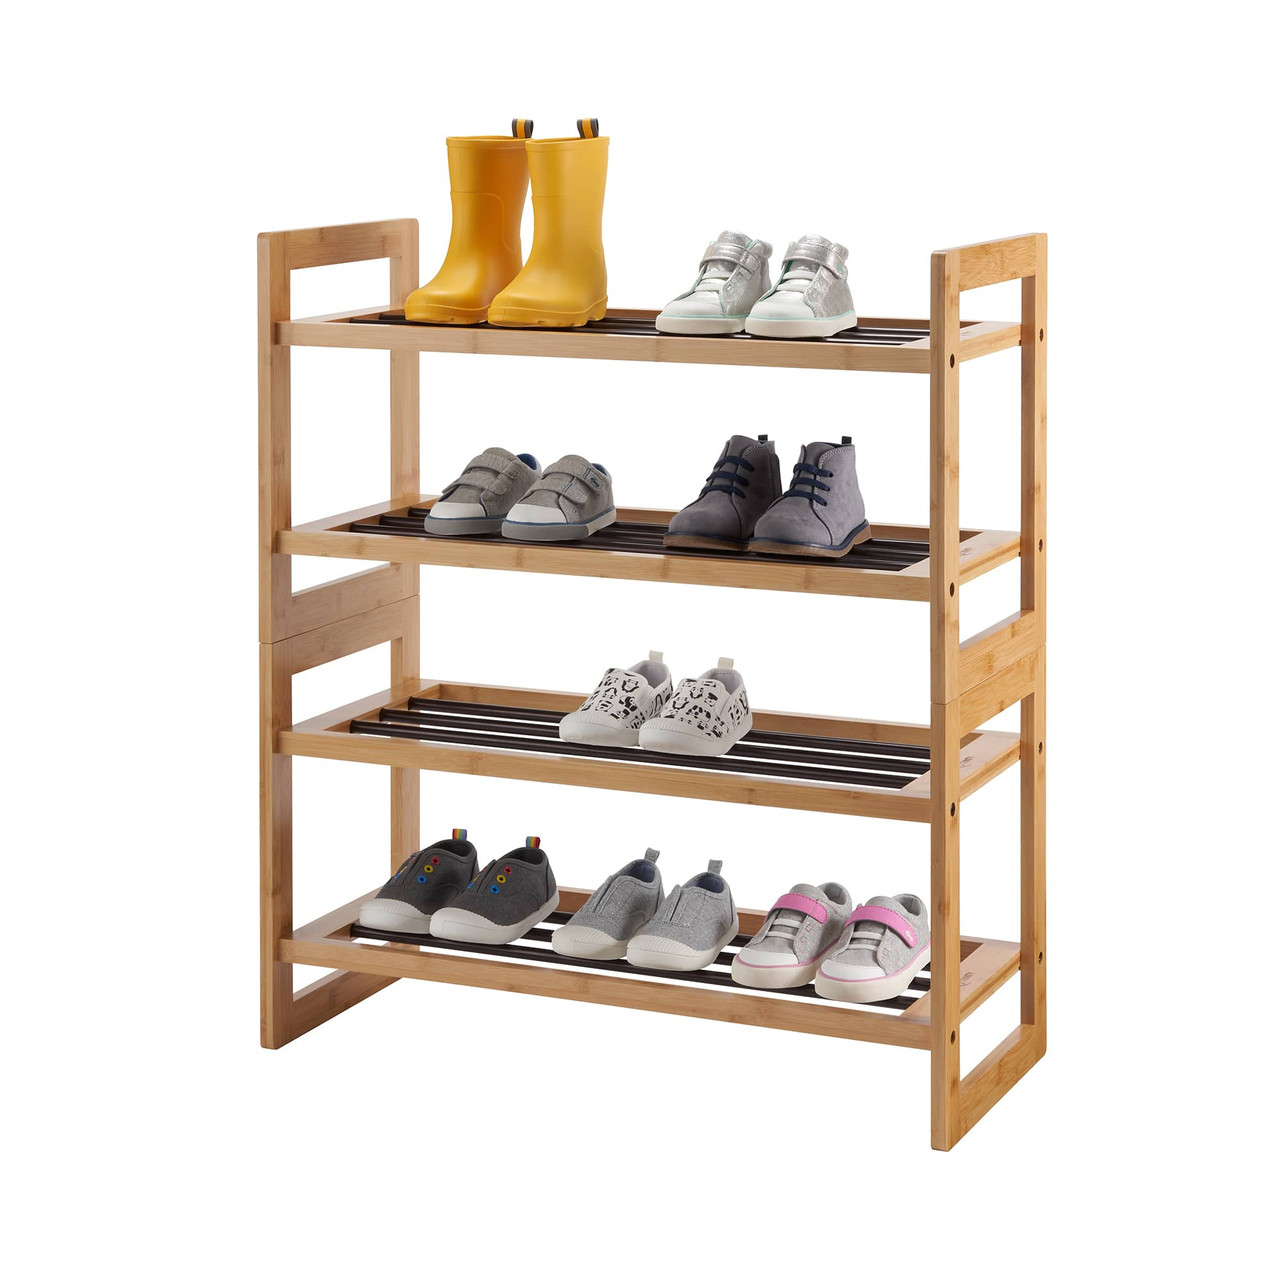 Shoe display rack retail rotating display stand metal shop furniture